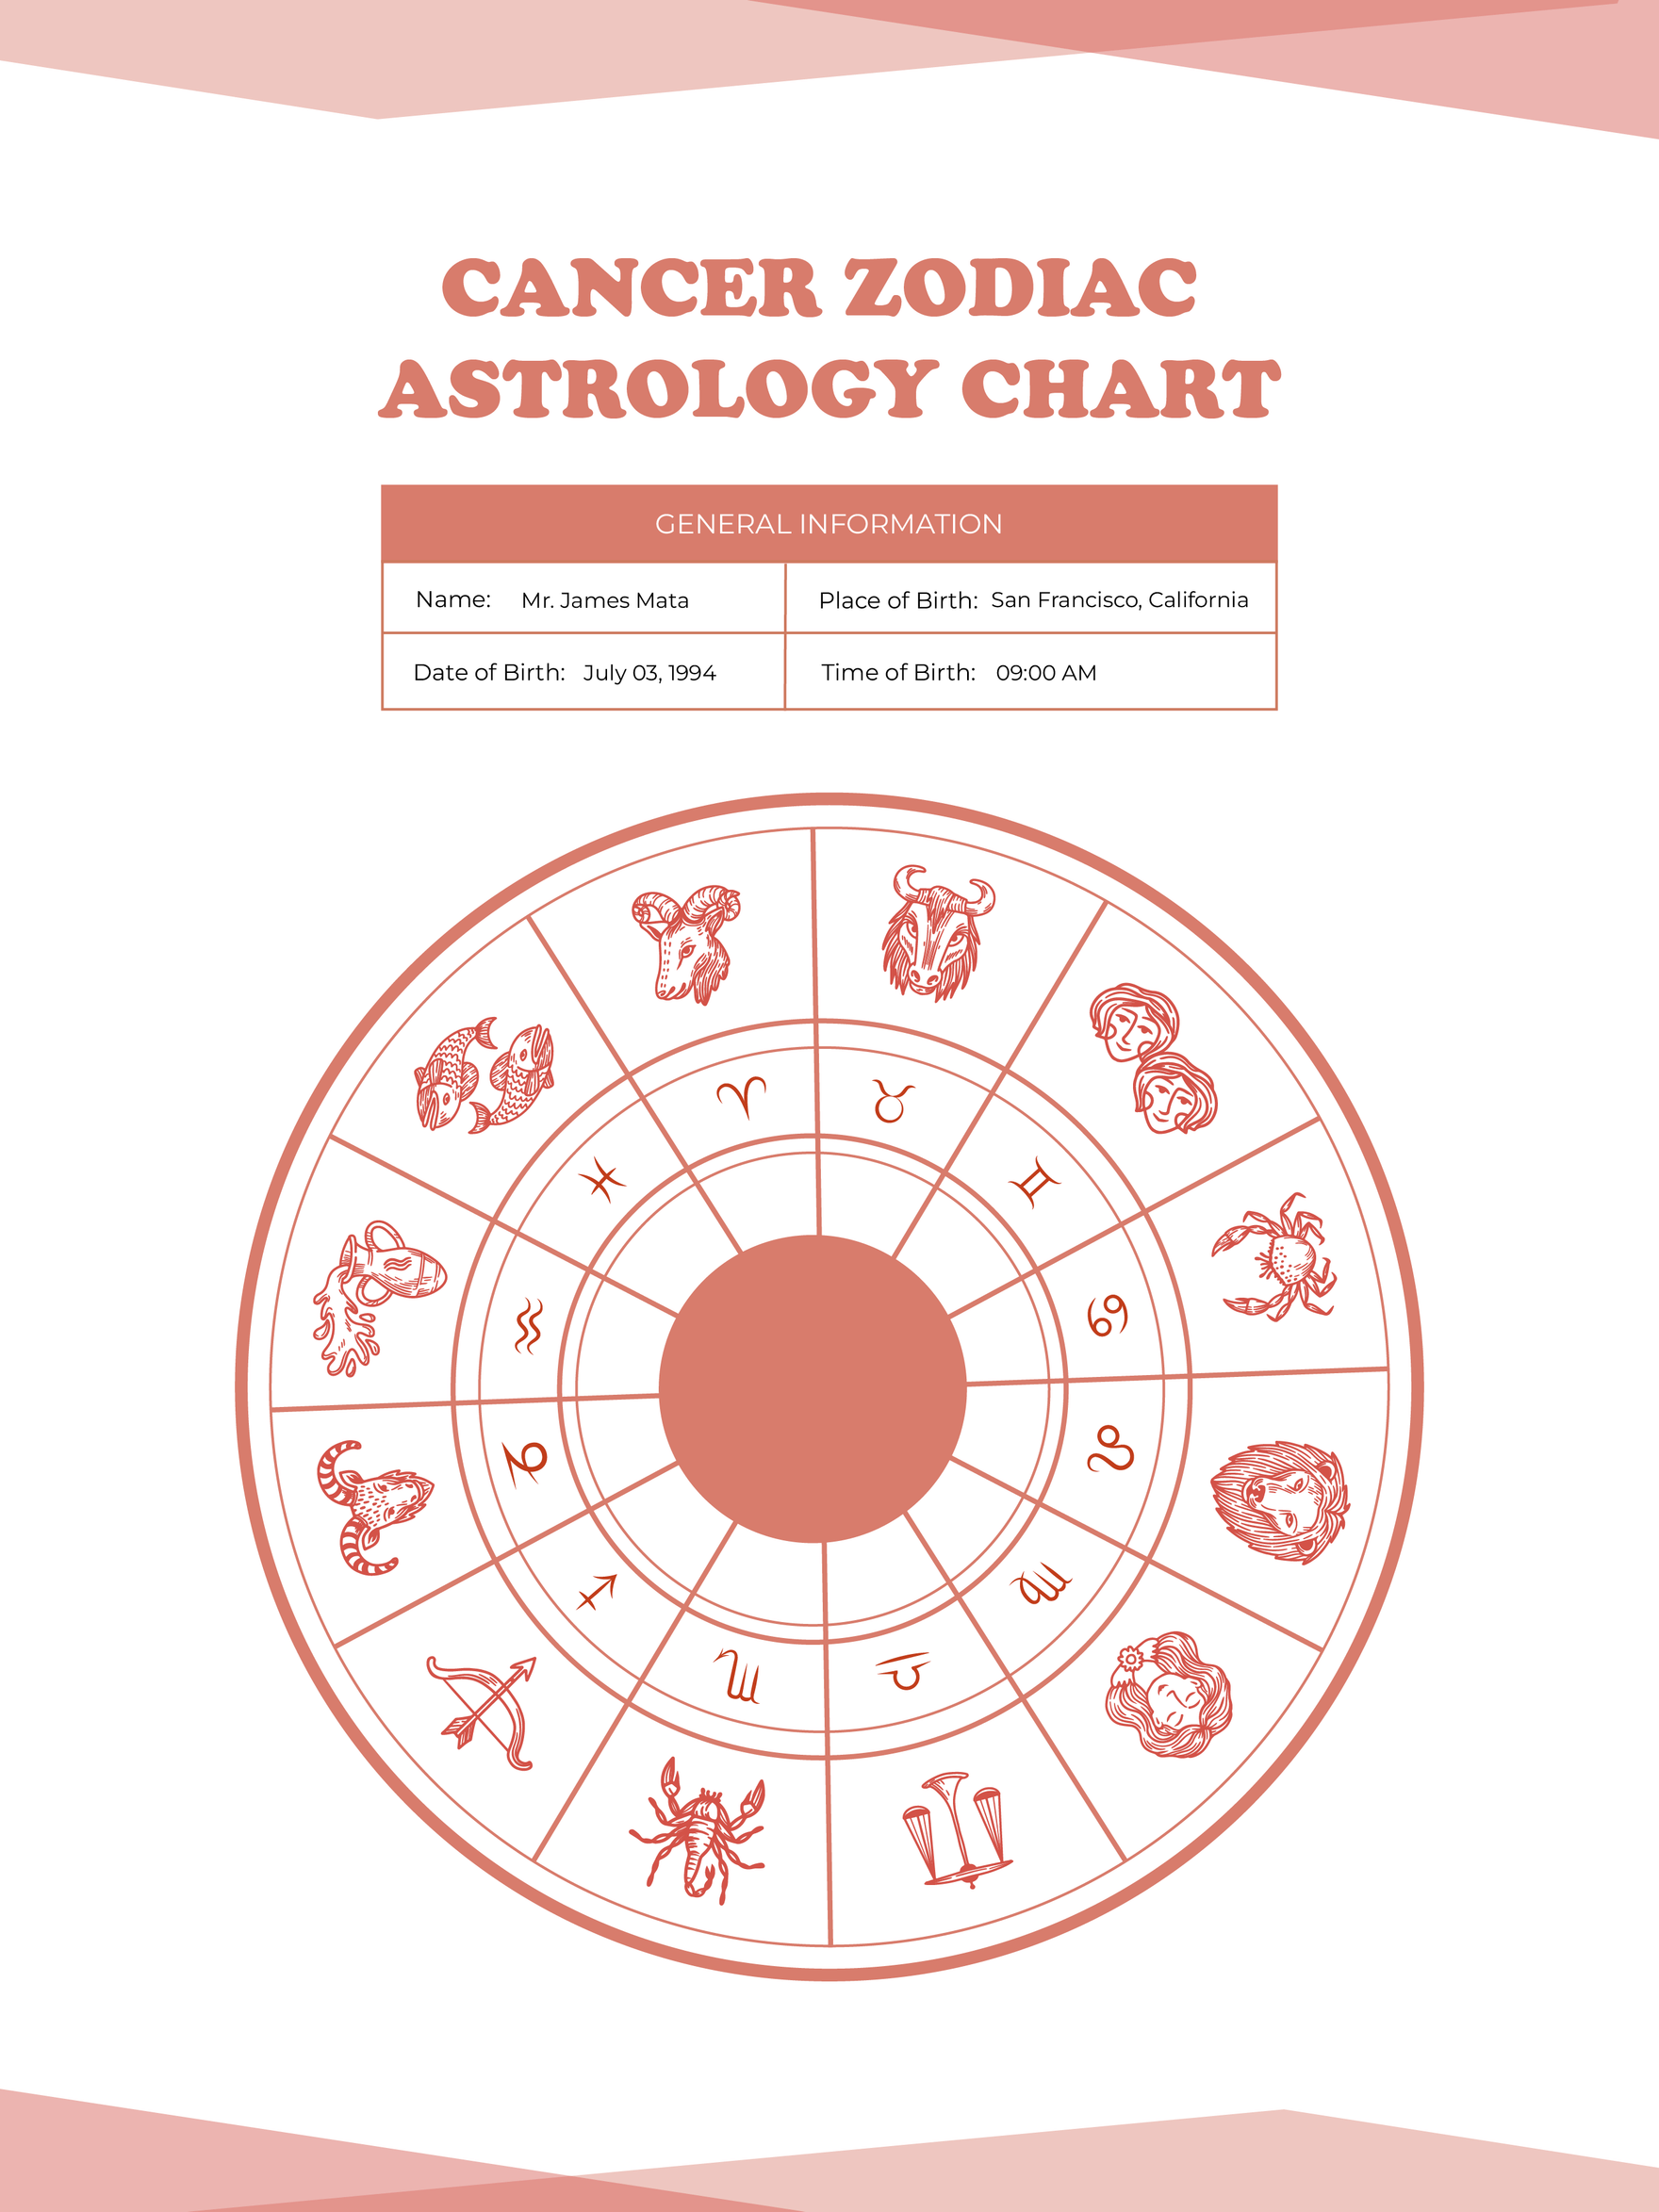 Cancer Zodiac Astrology Chart in PDF, Illustrator